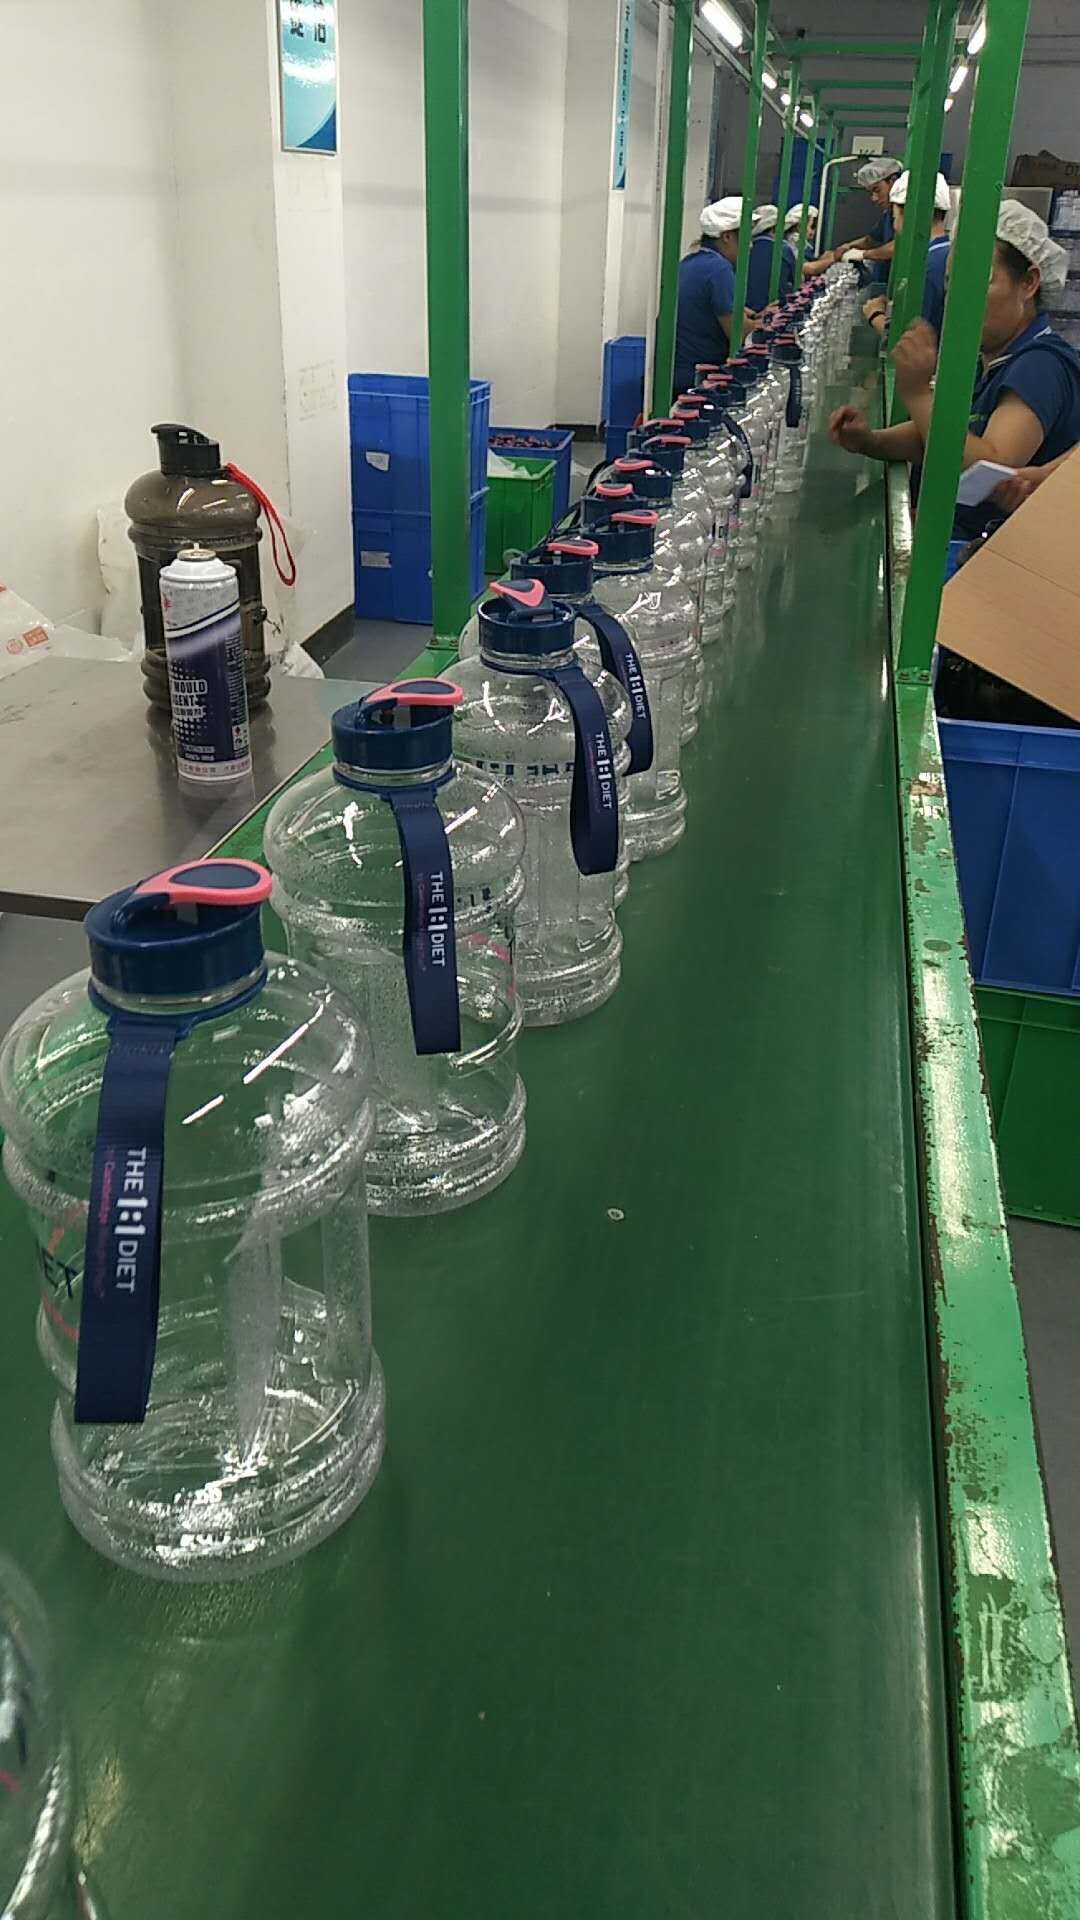 Peru customer 3500pcs 2.2 liter water bottle is ready for printing